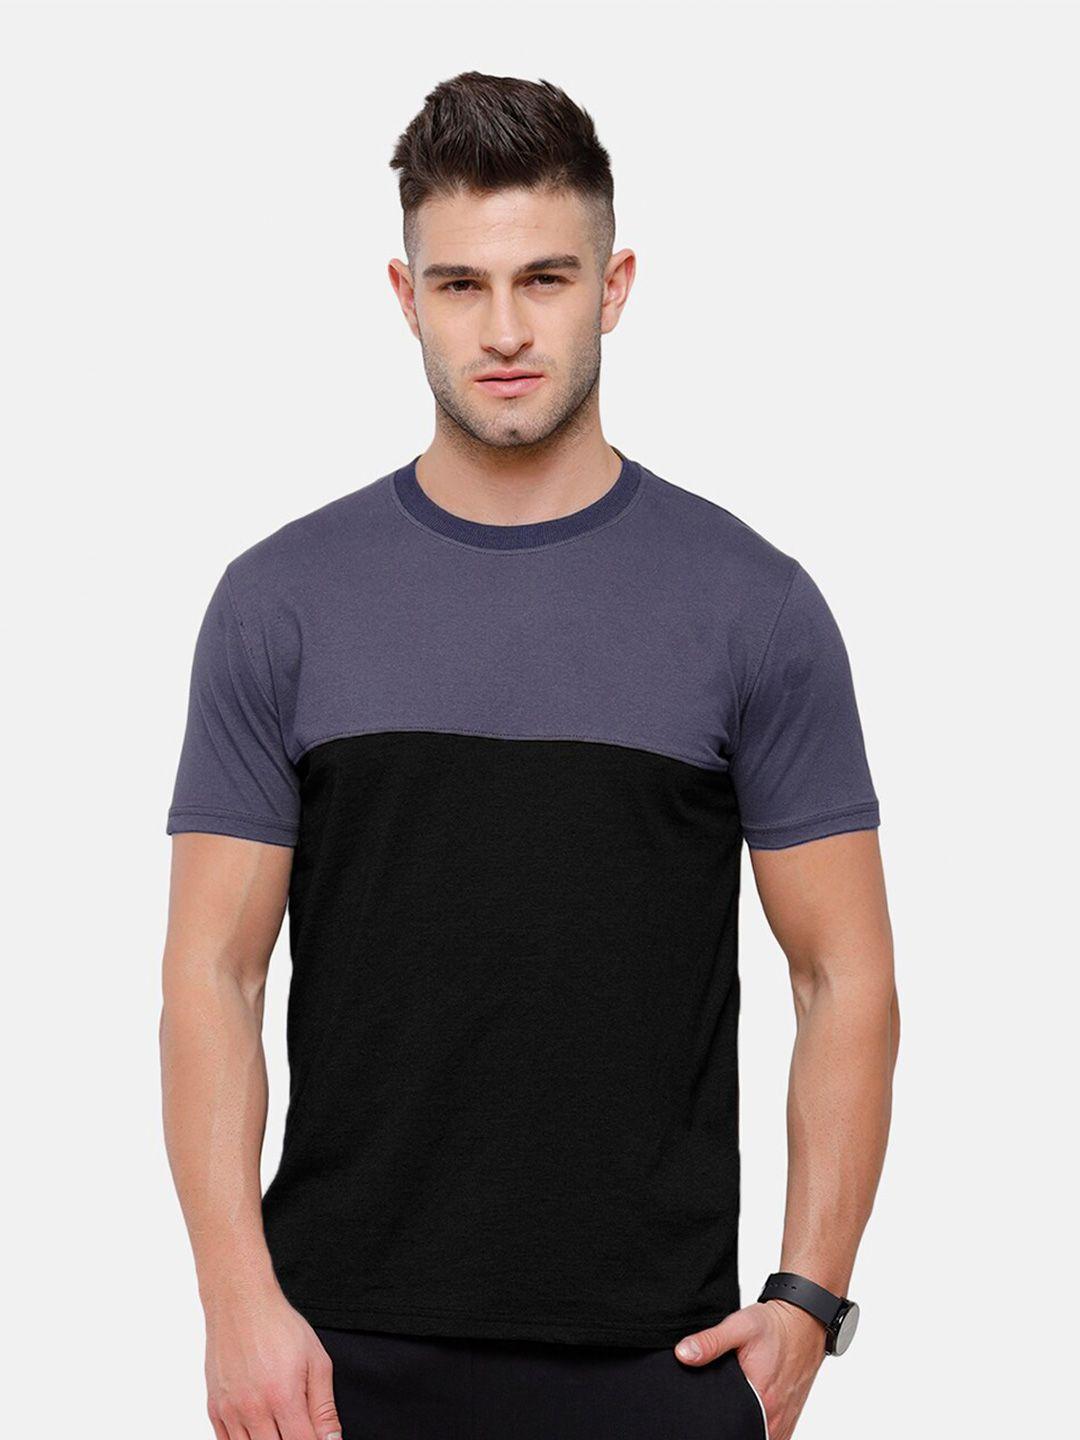 madsto men blue & black colourblocked slim fit running pure cotton t-shirt